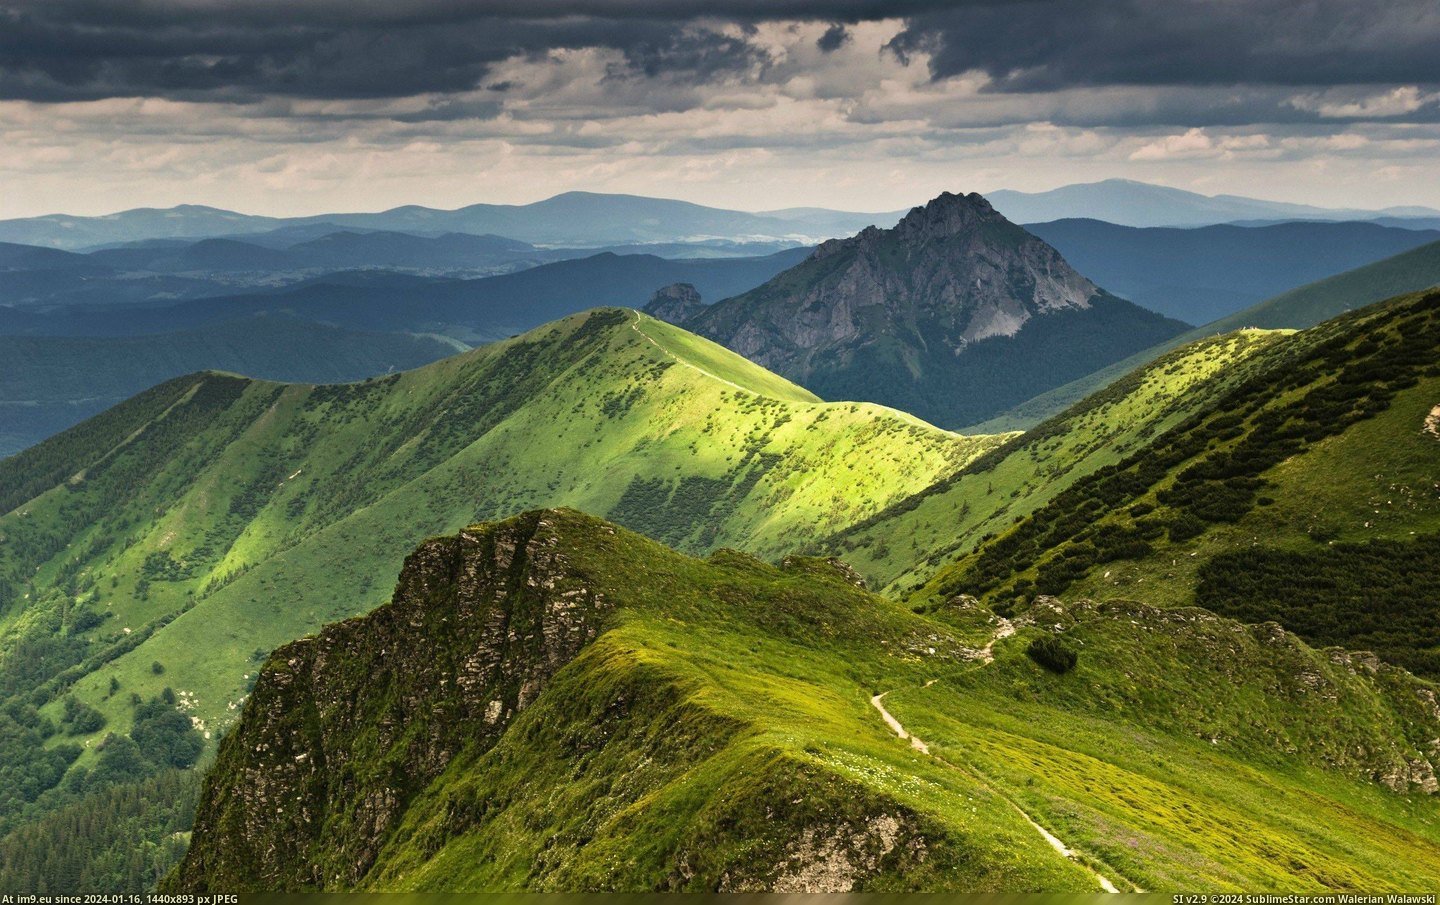 #Mountains #Polomsky #Jakub [Earthporn] 'Mountains of my Home' by Jakub Polomsky [2560 x 1600] Pic. (Изображение из альбом My r/EARTHPORN favs))